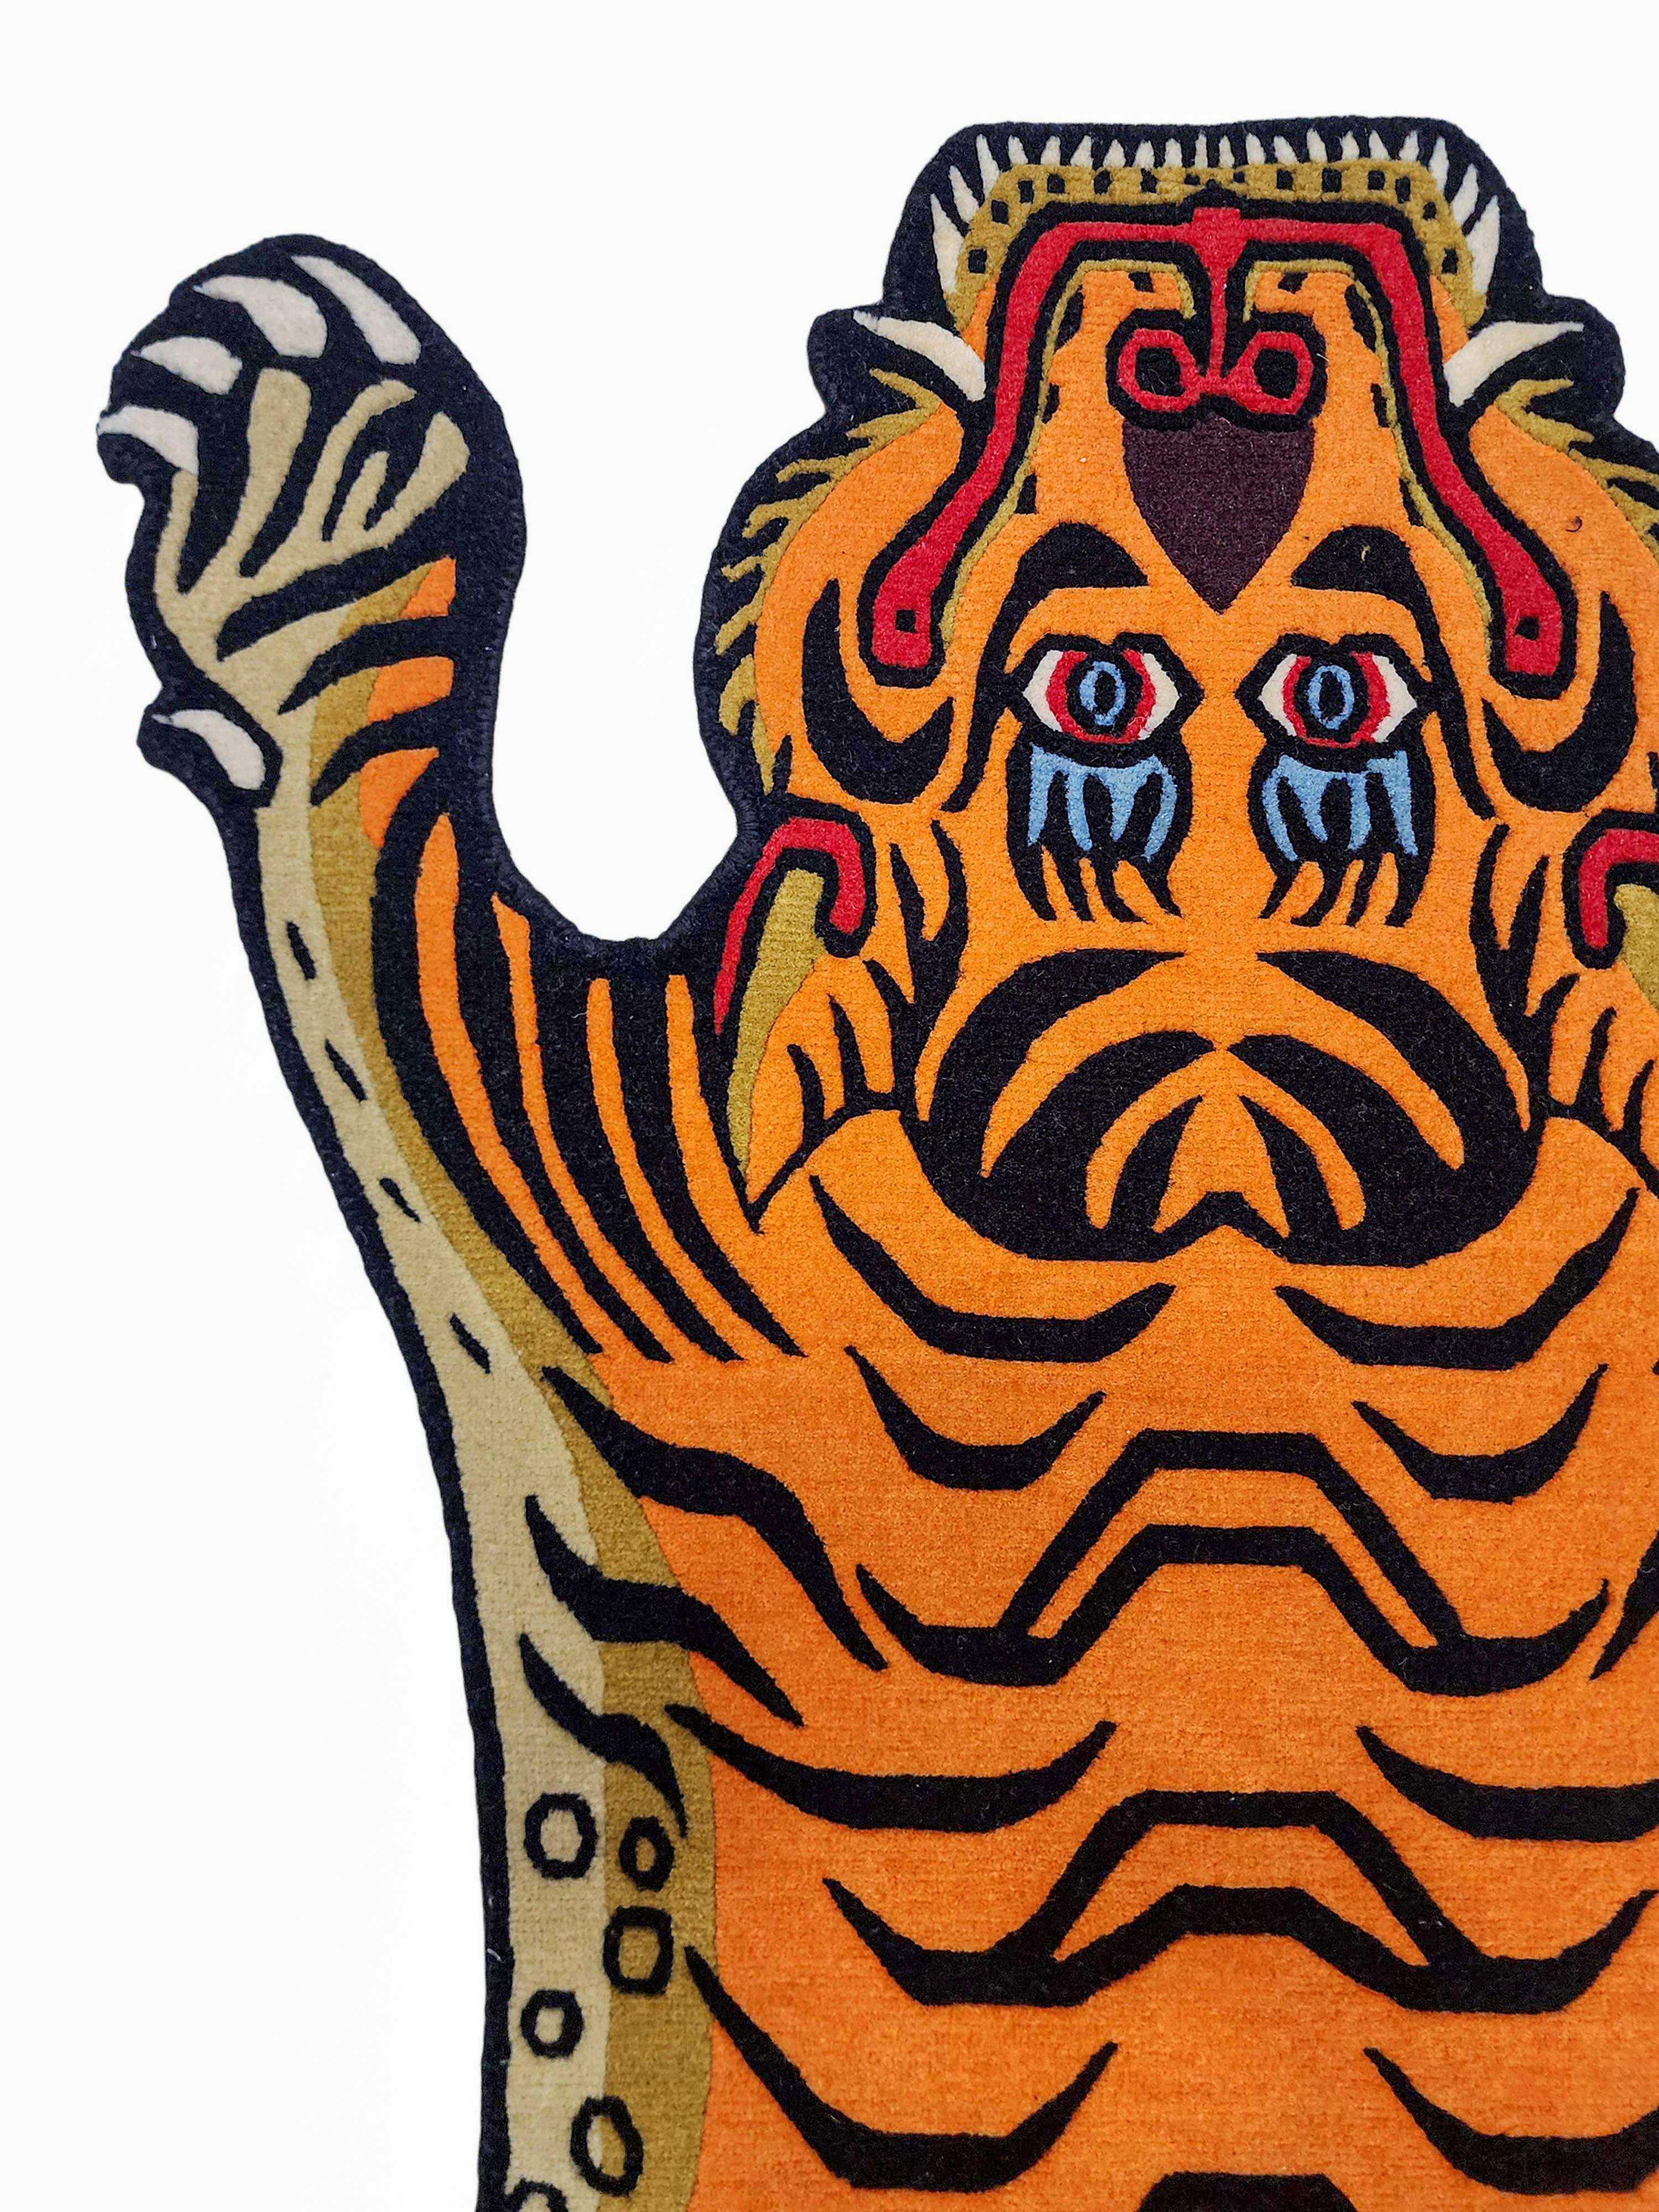 tiger Design Rug/carpet, Handwoven In Nepal, Orange Color, Medium Size